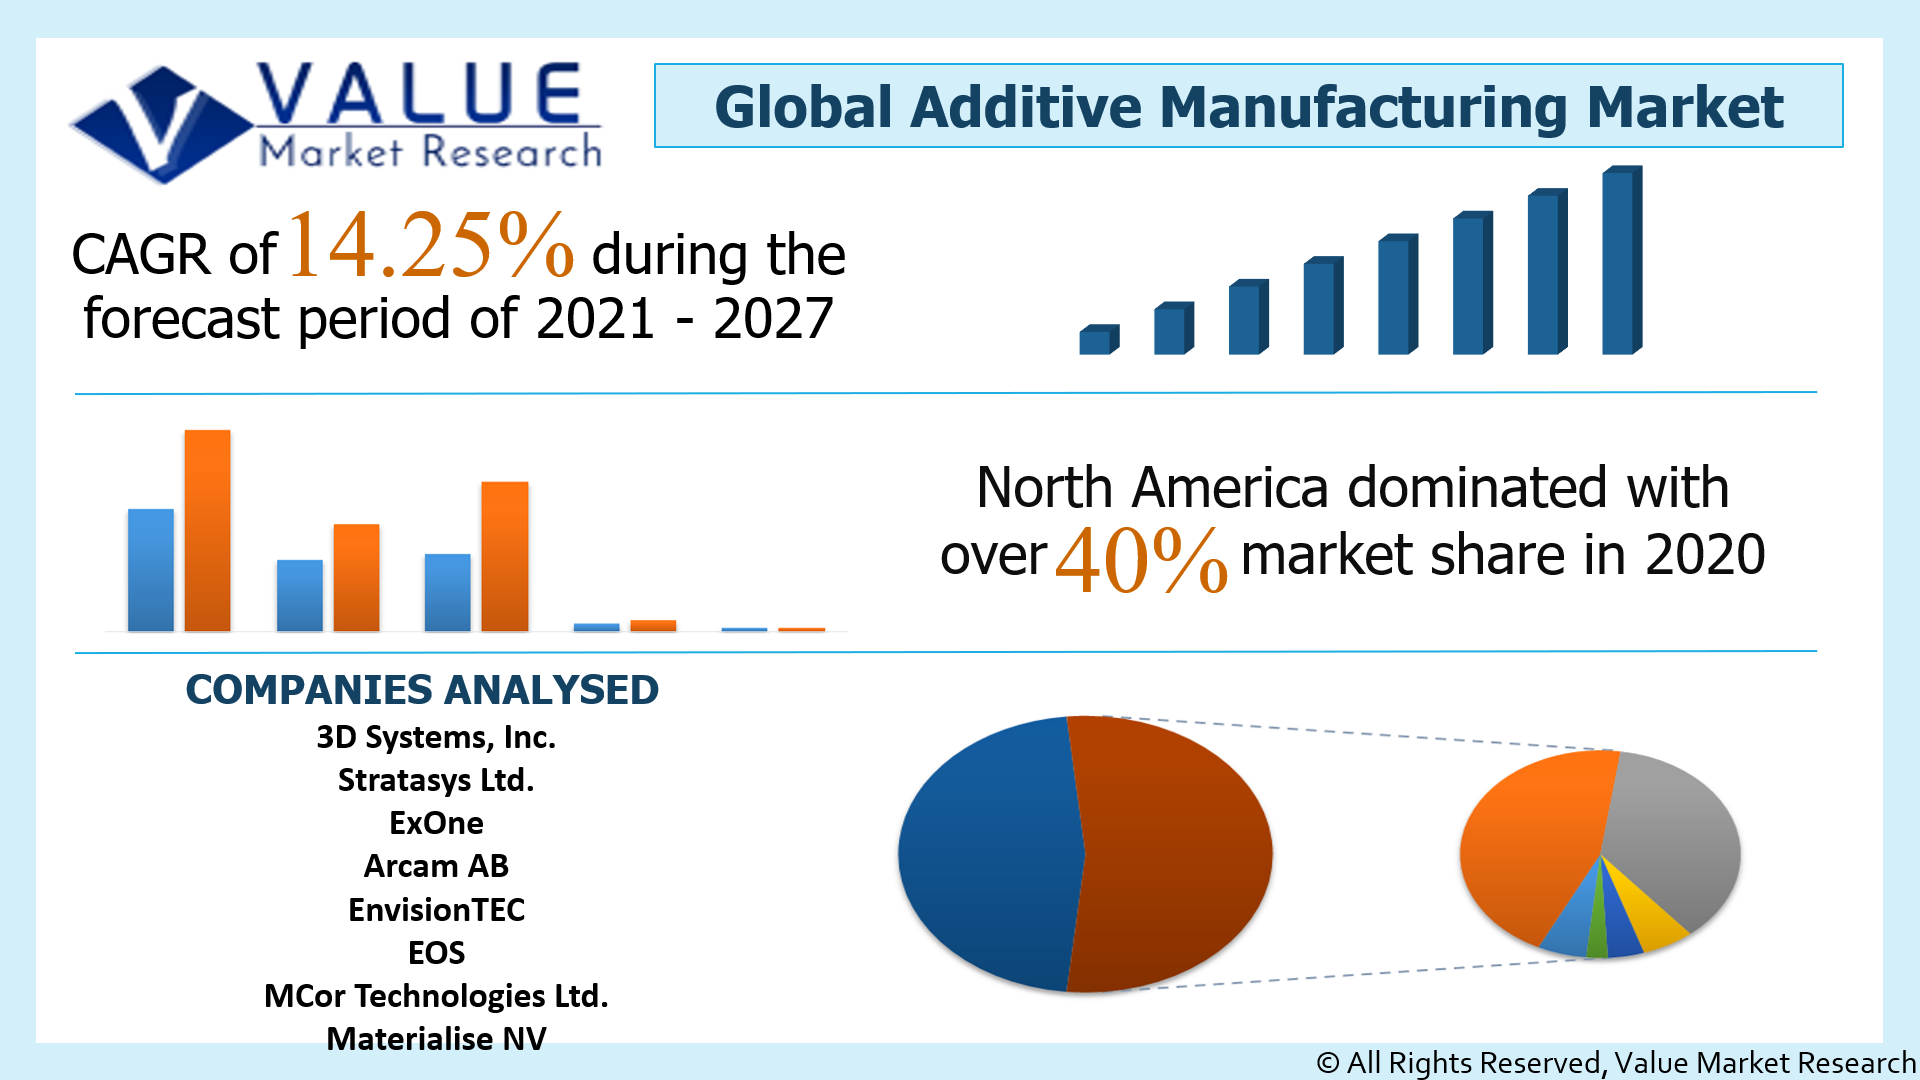 Global Additive Manufacturing Market Share